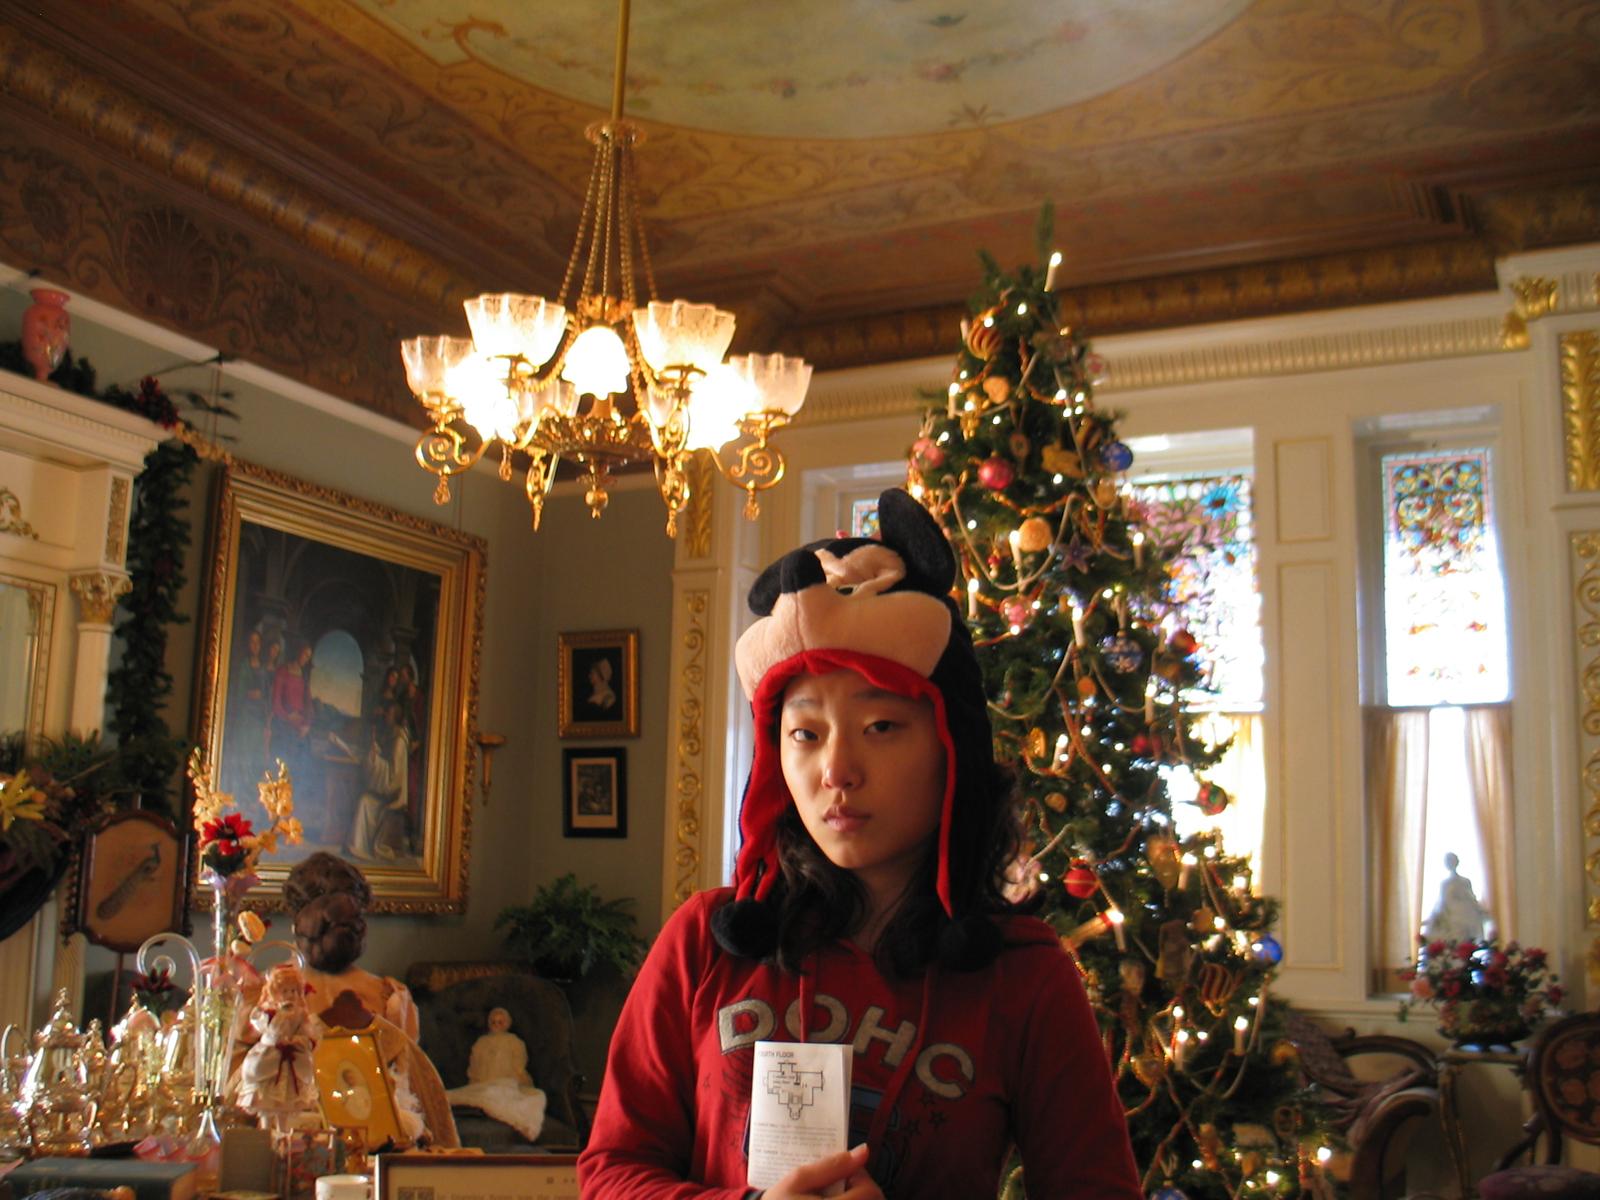 Soomi in the "Christmas Room"